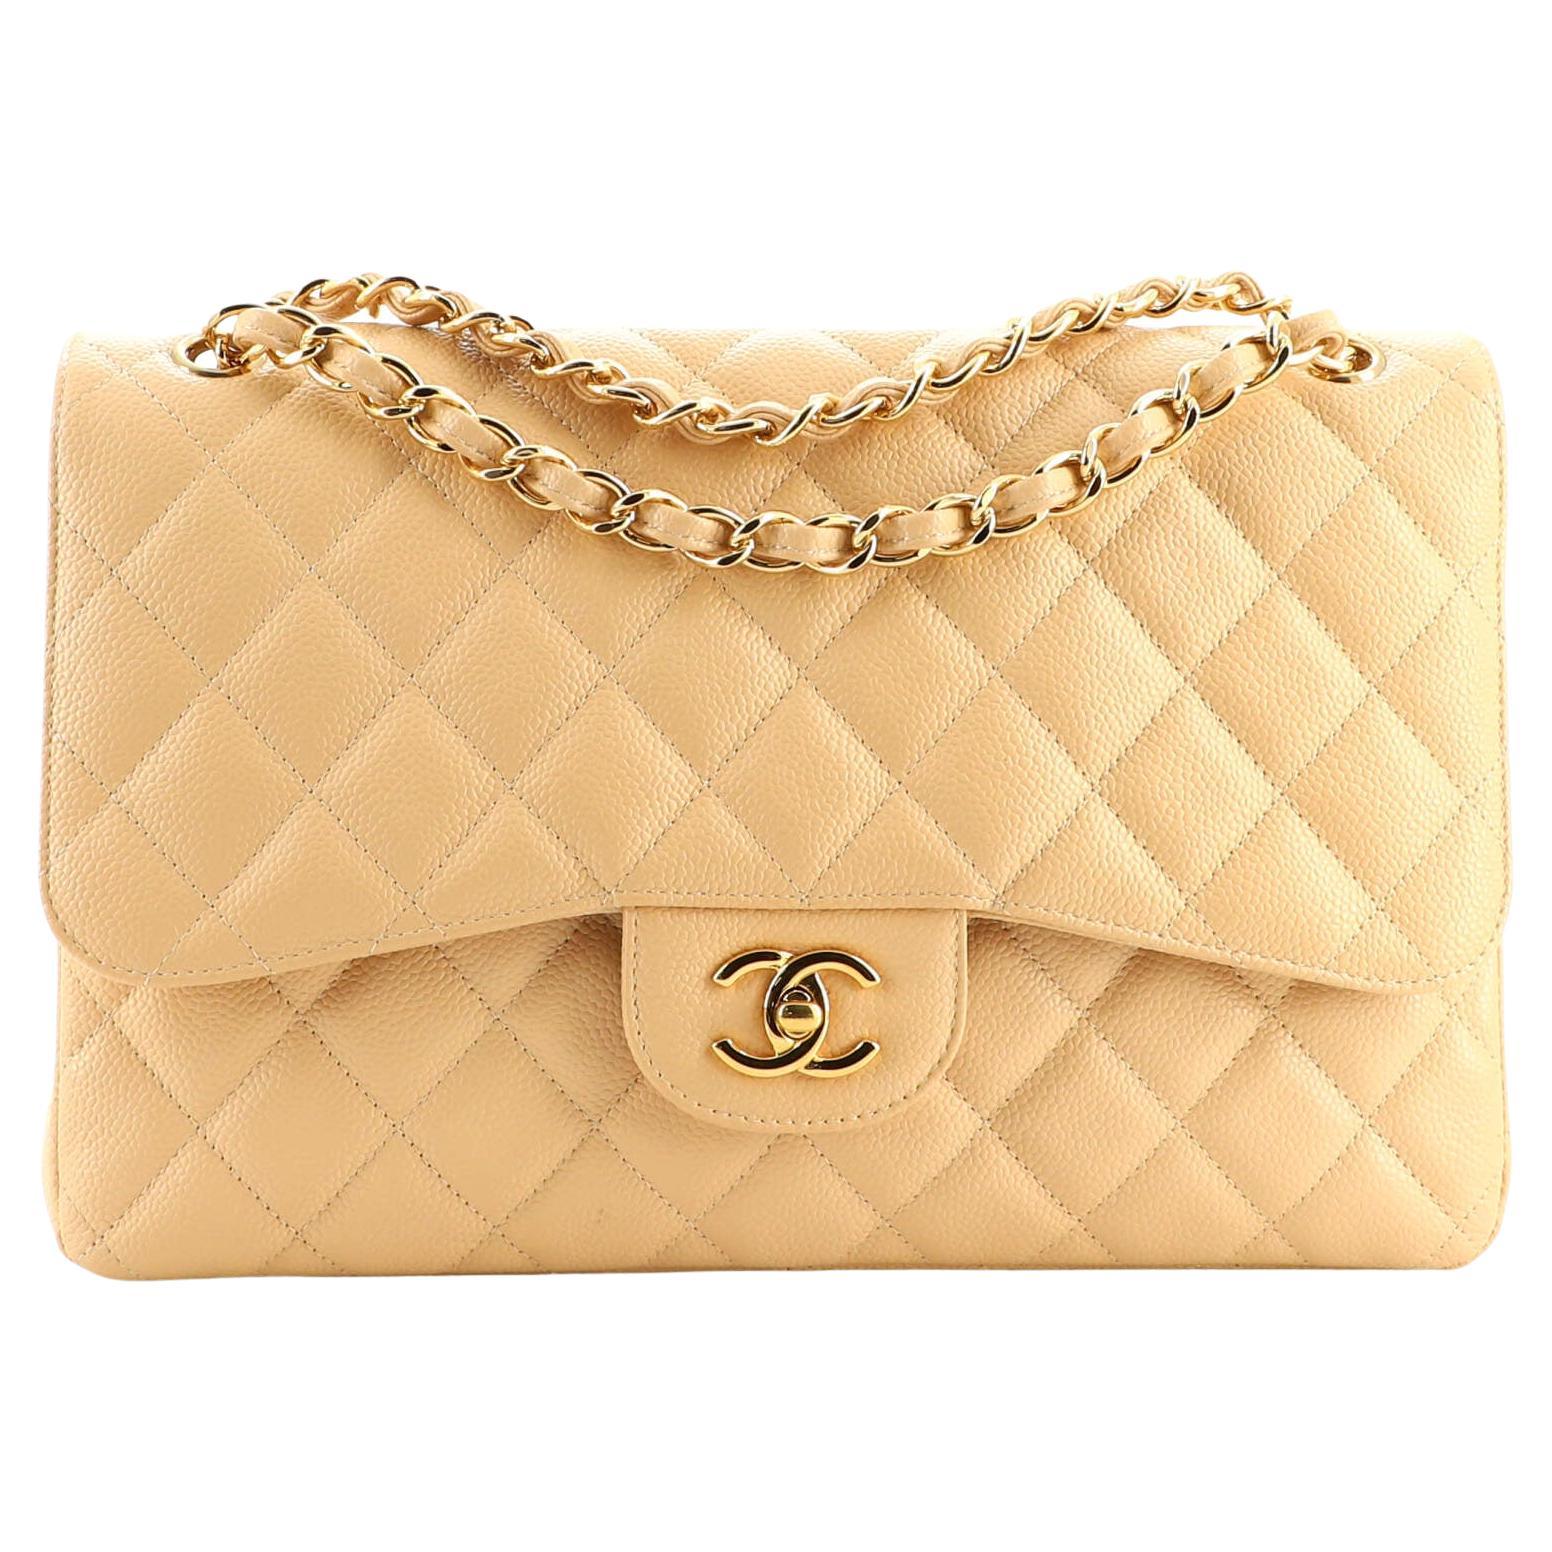 Chanel Beige Chevron Shoulder Bag